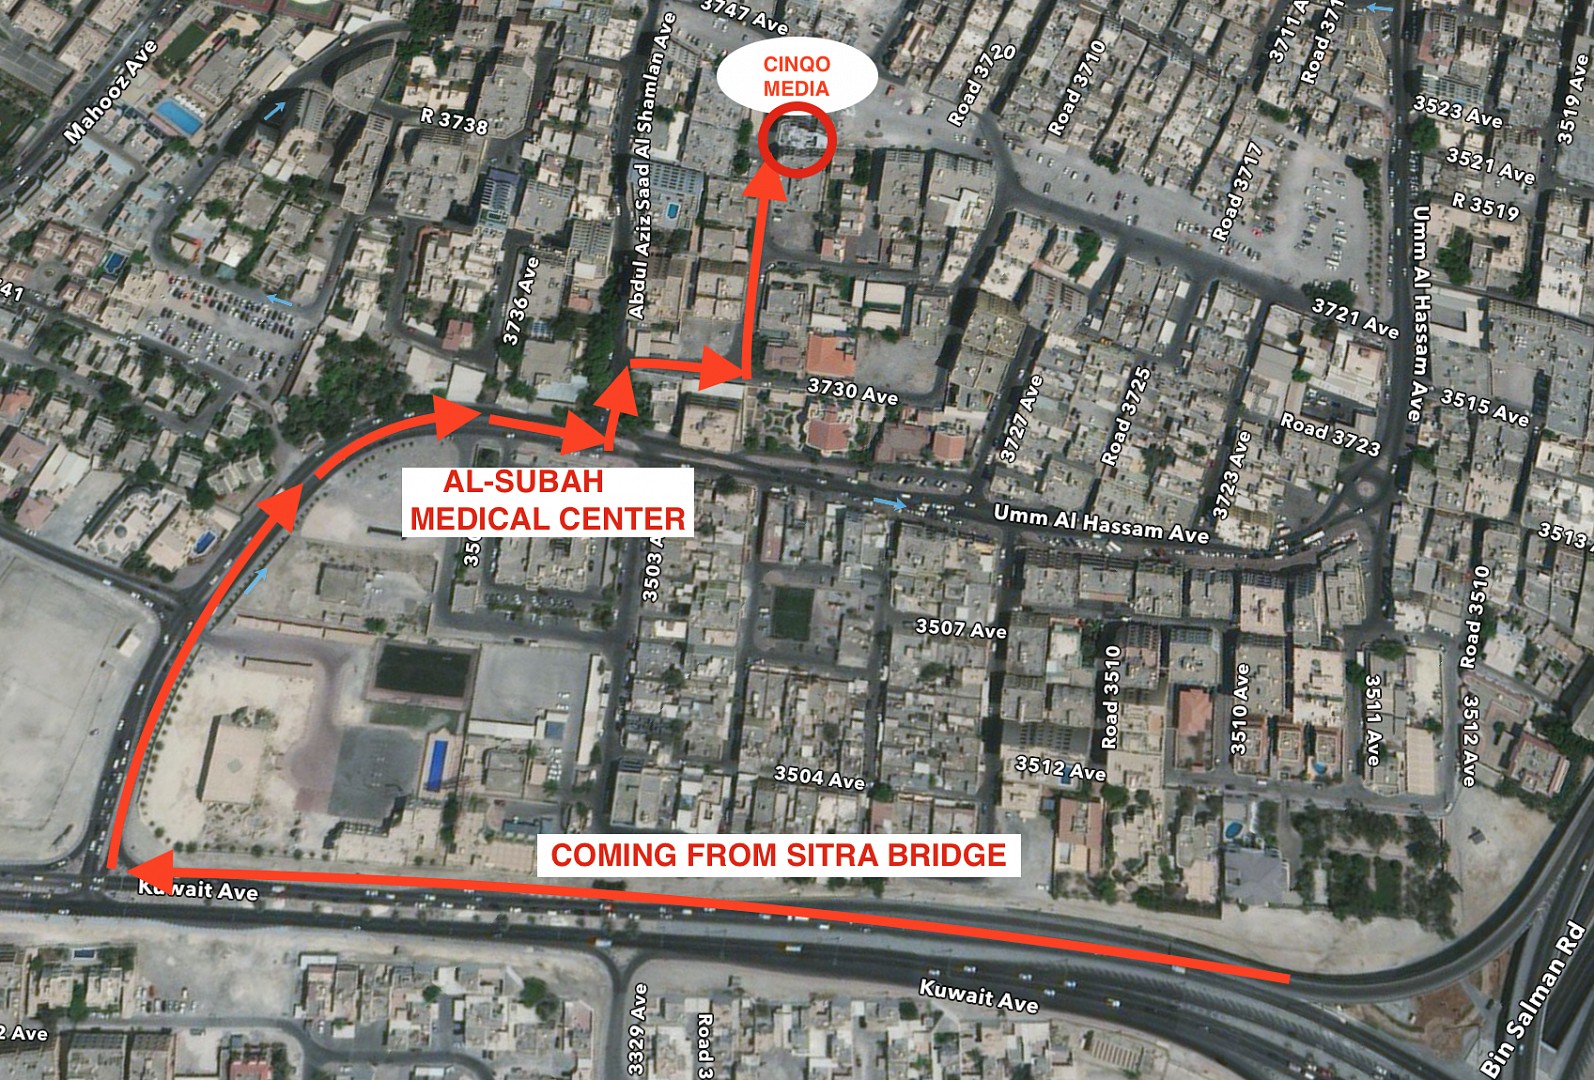 Location Map @ Cinqo Media - Bahrain